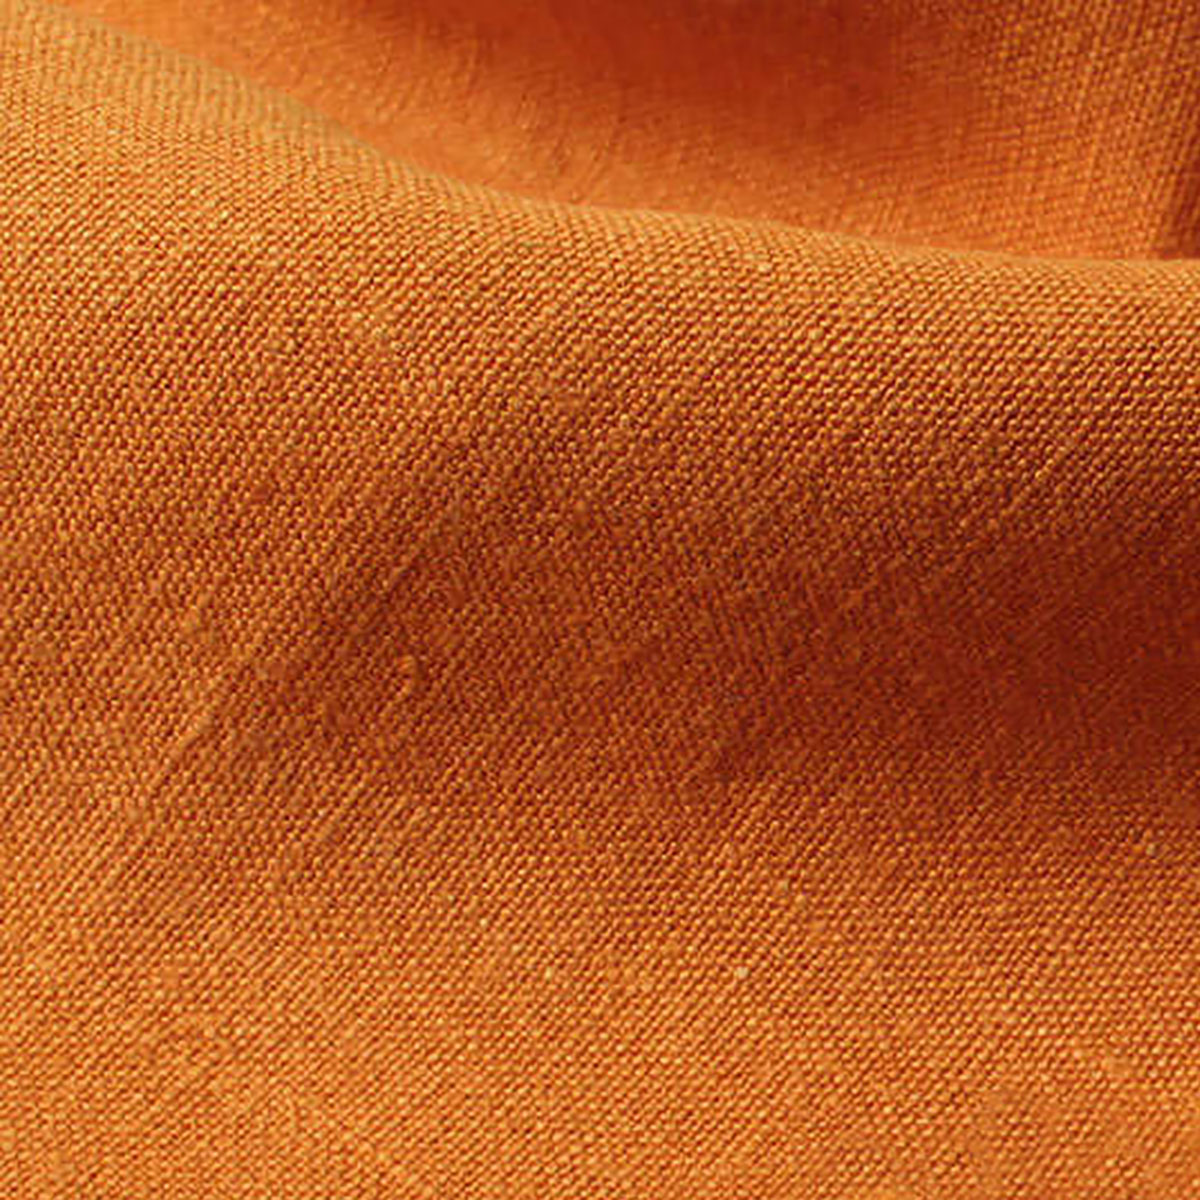 Orange hemp fabric